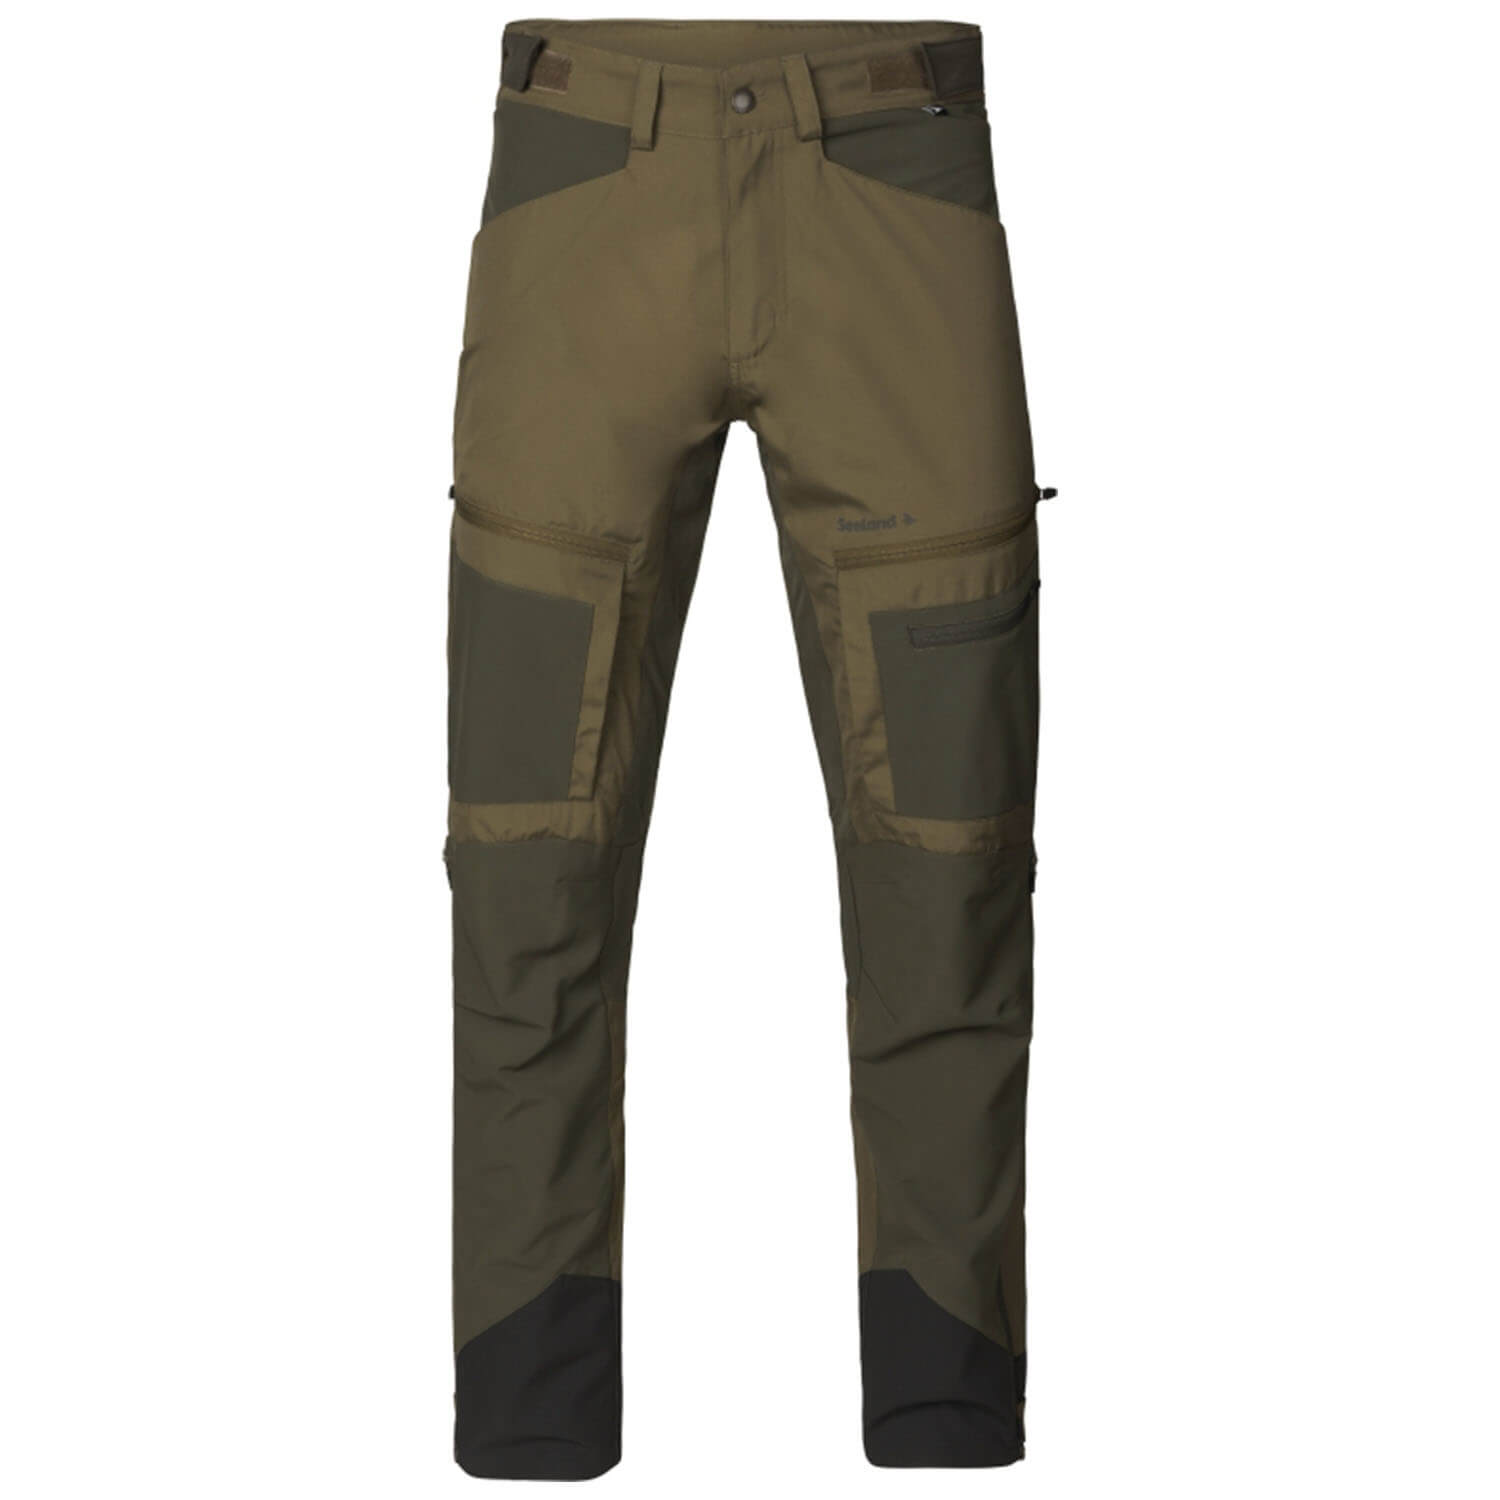 Seeland pants hemlock (Military Olive/Pine Green) - New Arrivals